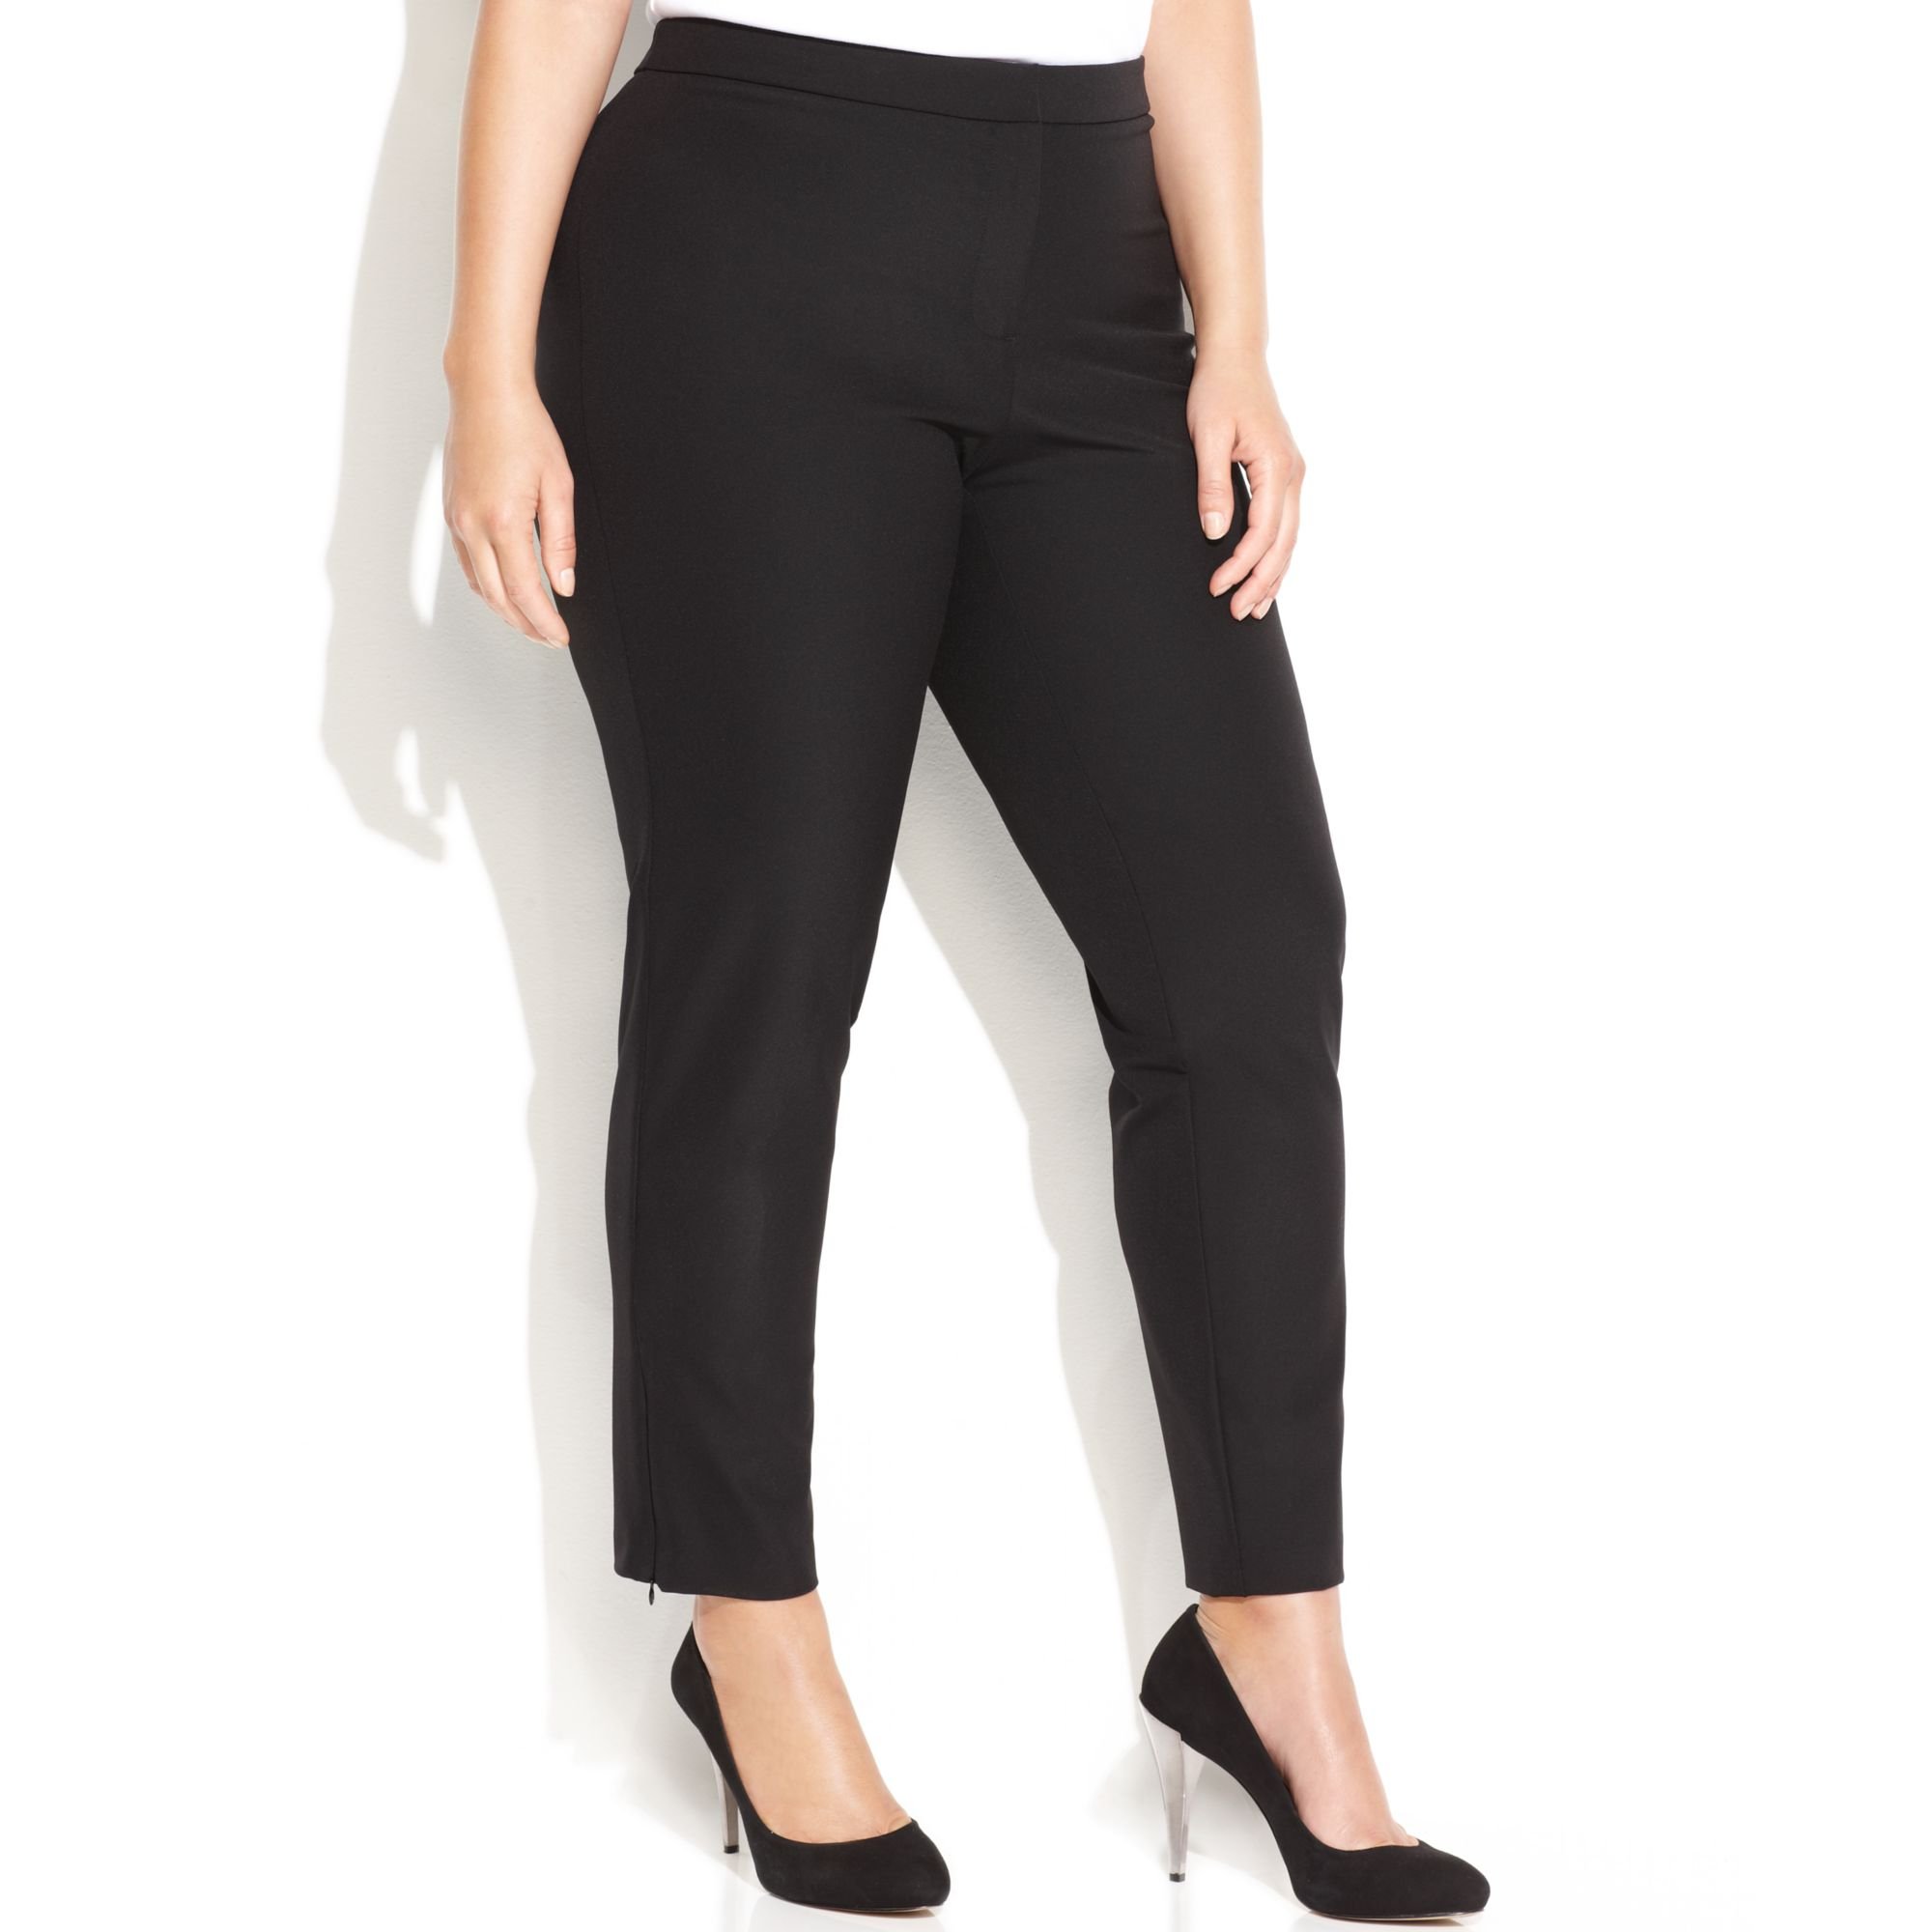 Lyst - Calvin klein Plus Size Cropped Anklezip Dress Pants in Black